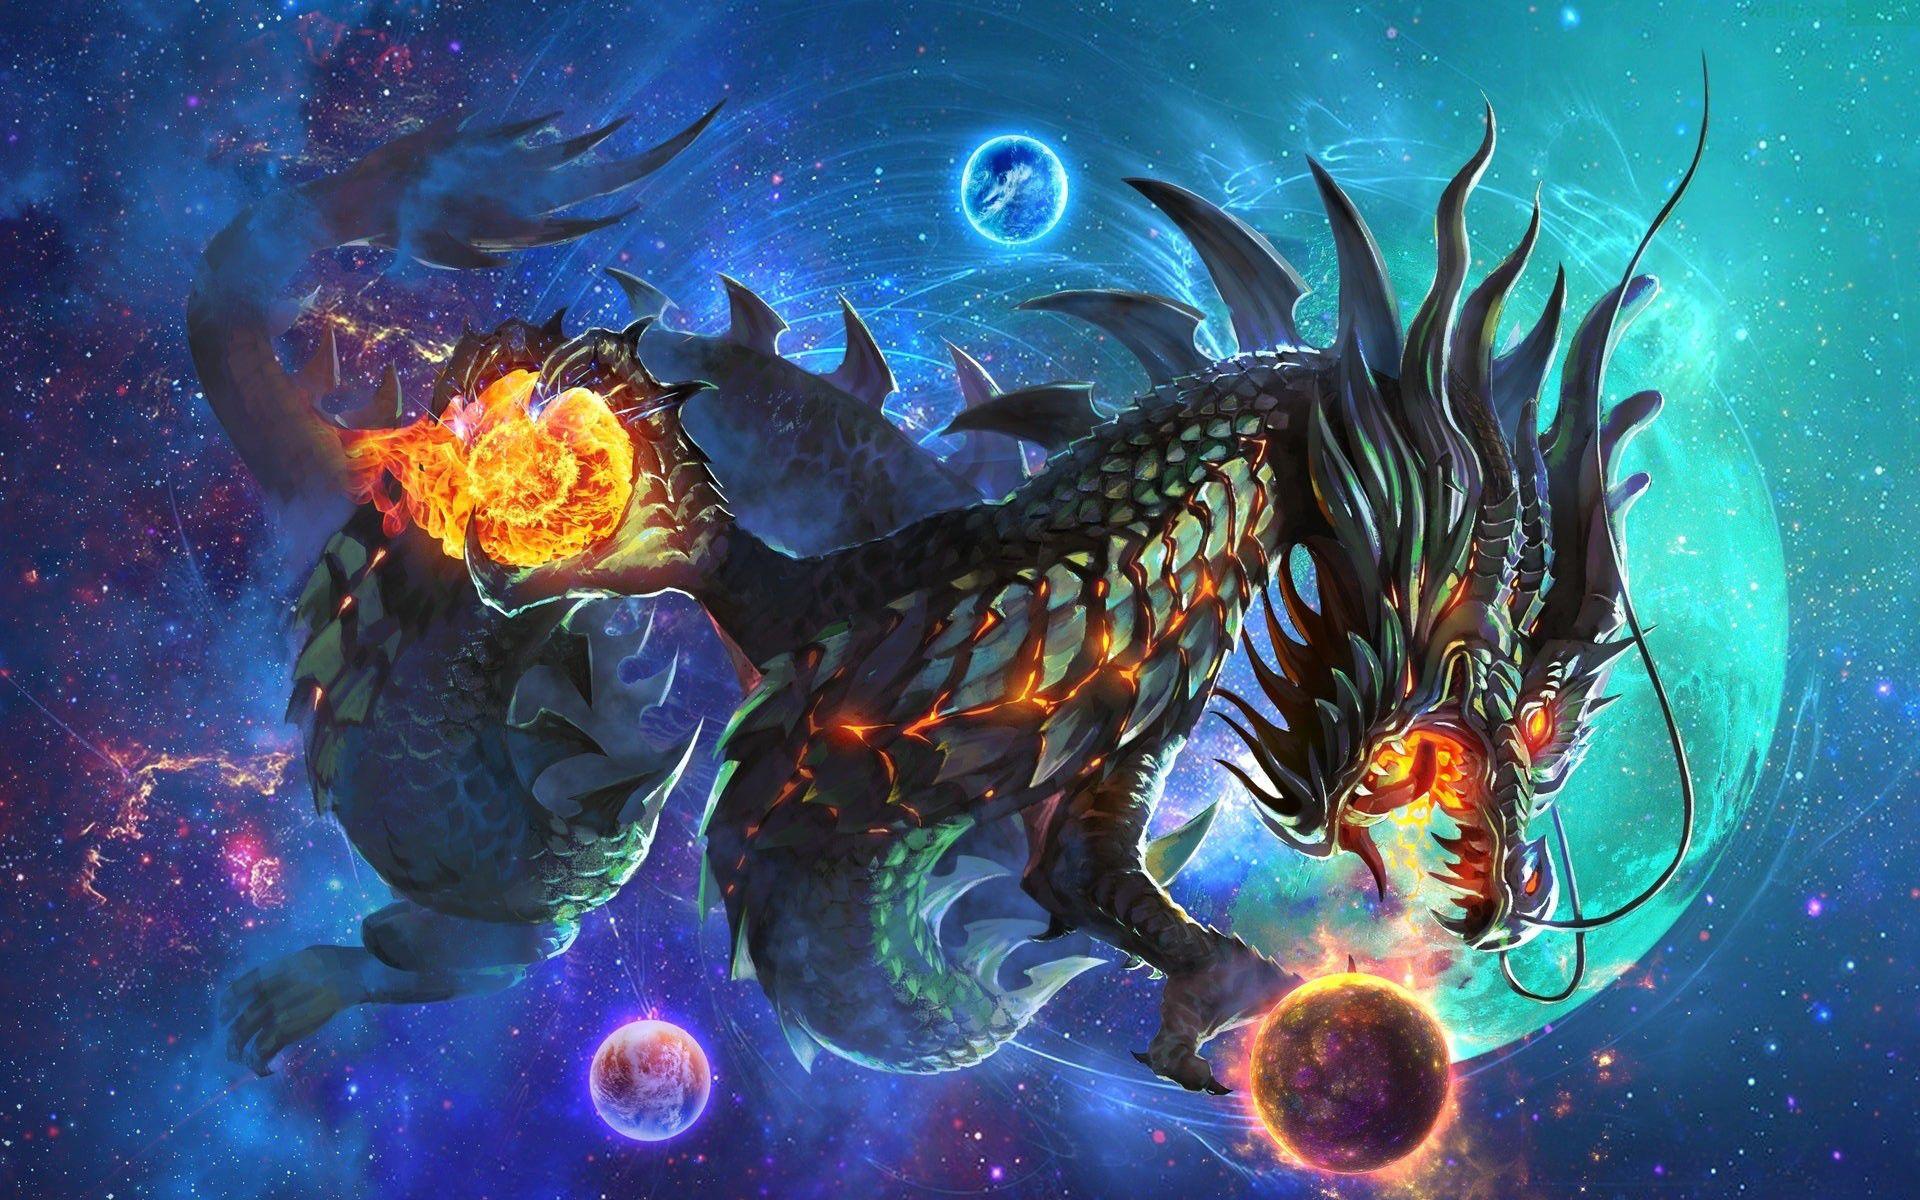 Fantasy Dragon Wallpaper. Dragon picture, Dragon